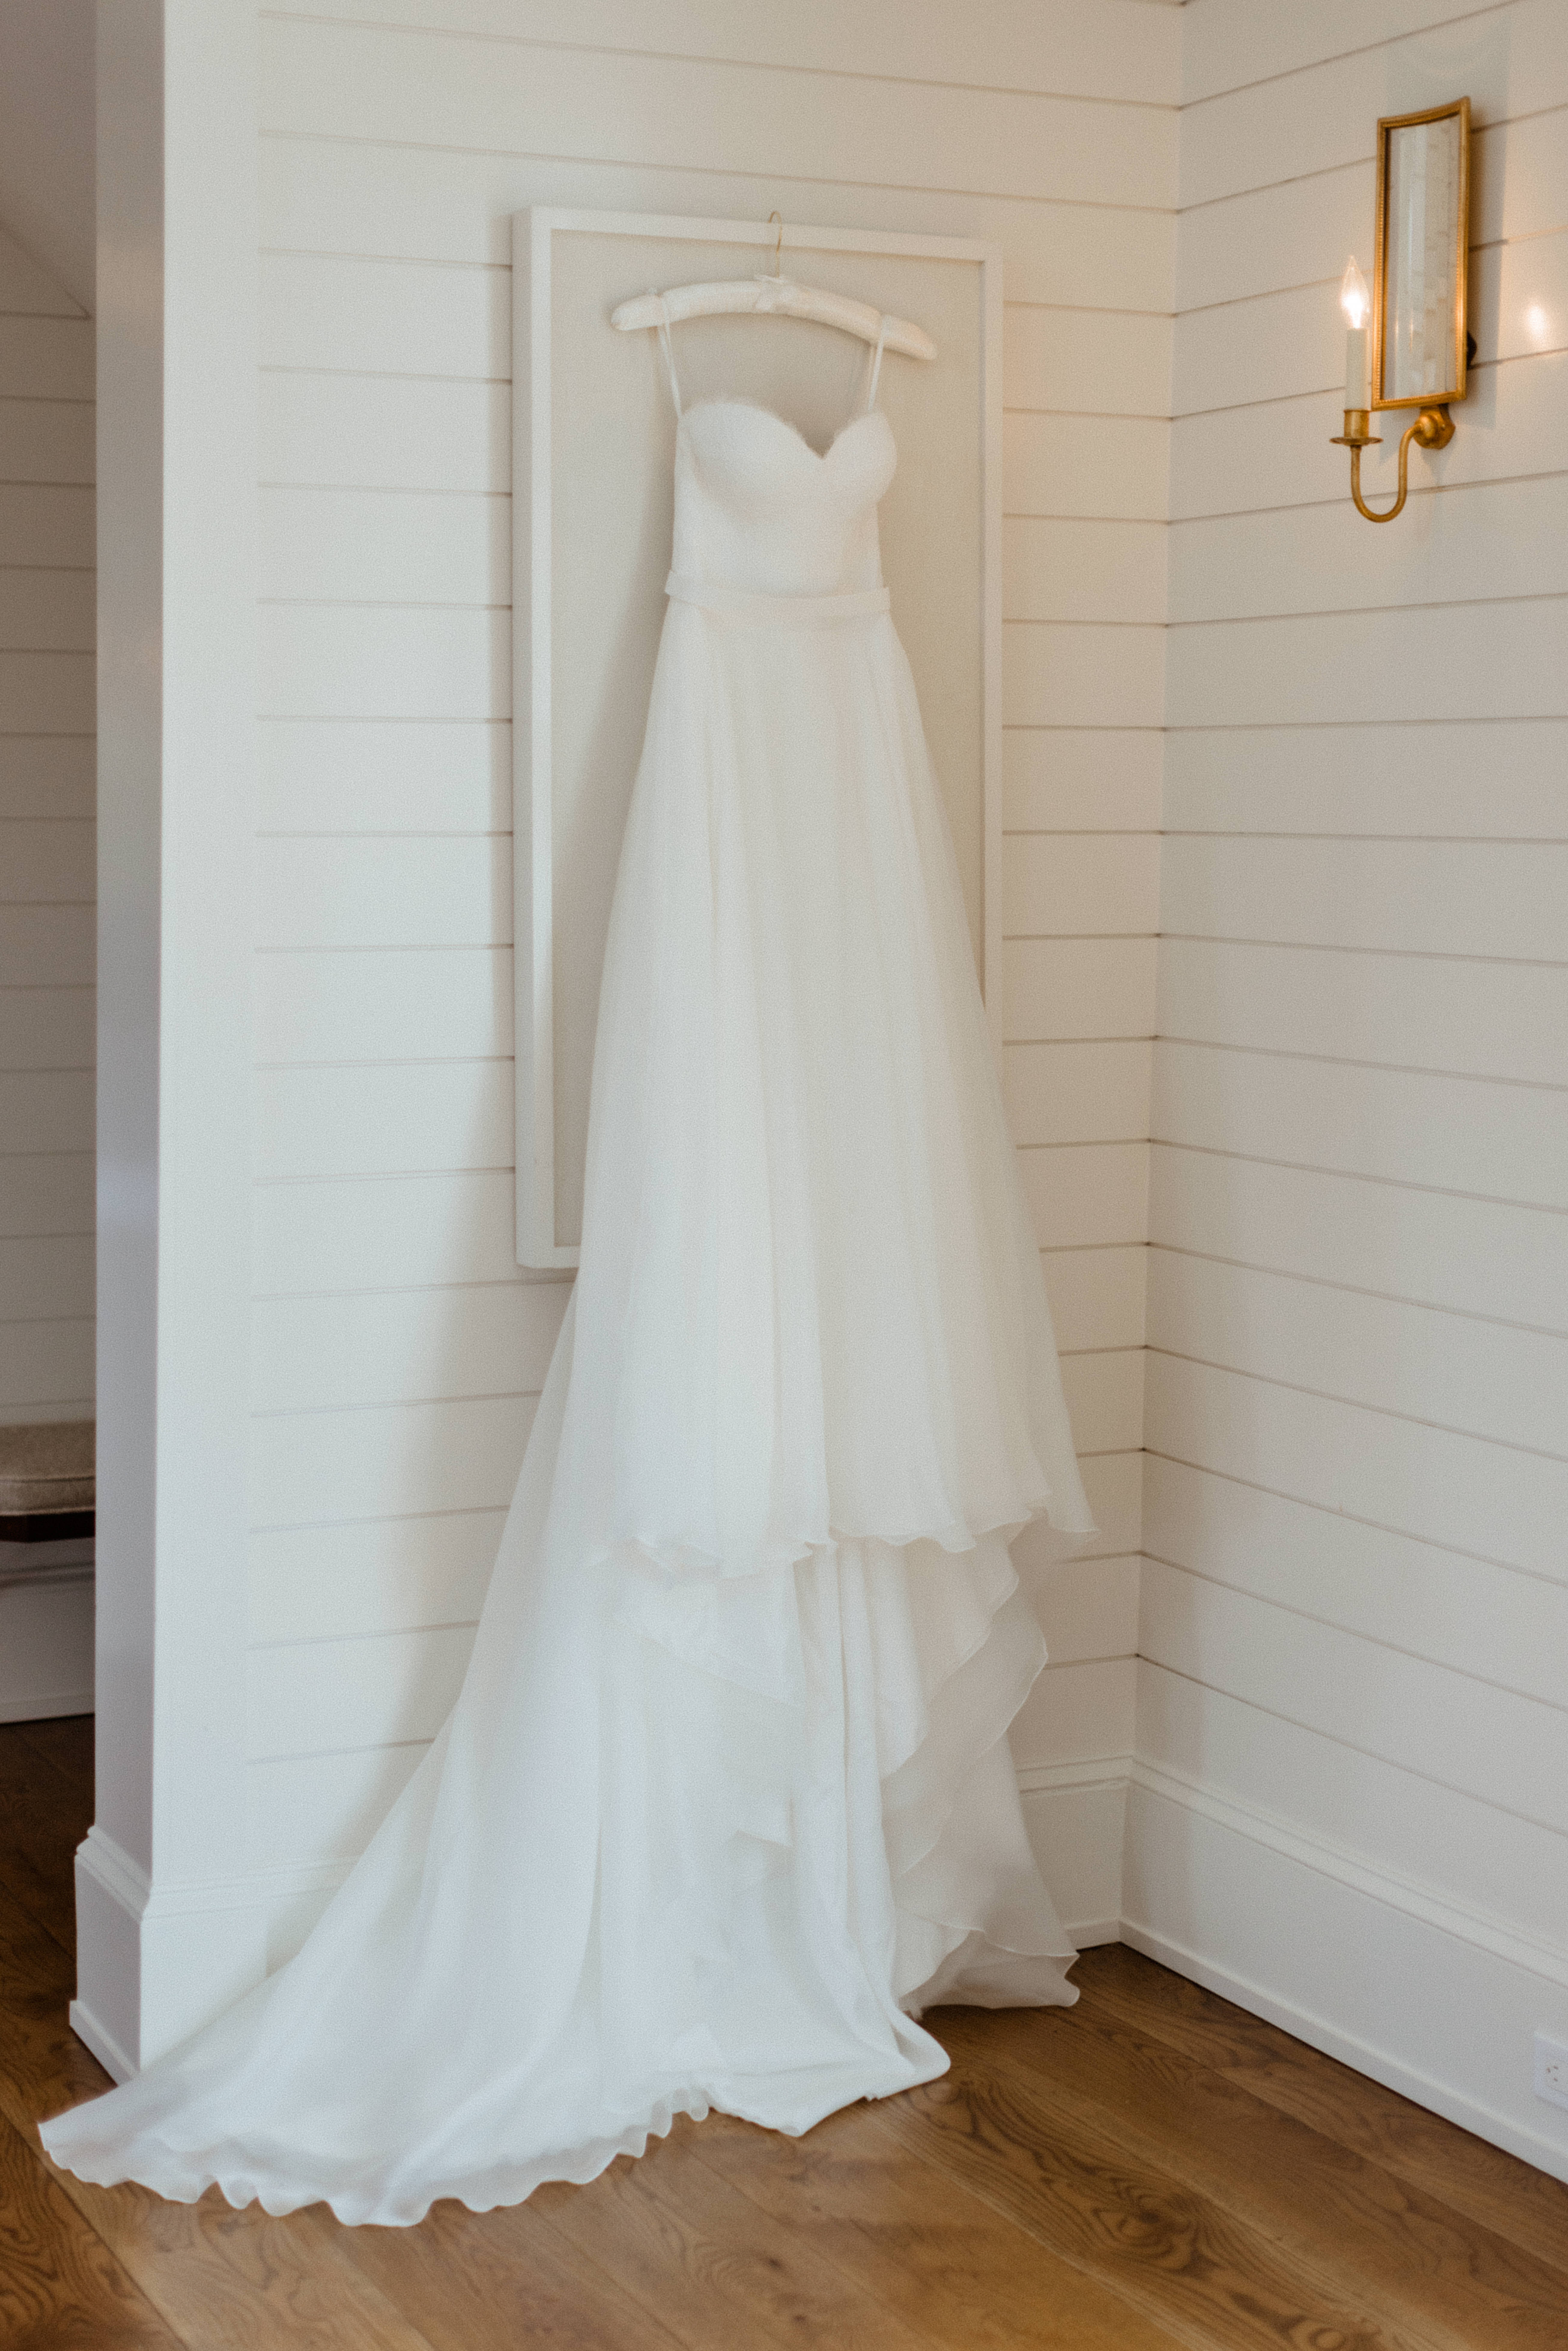 stunning wedding dress hangs ready for the big wedding day!